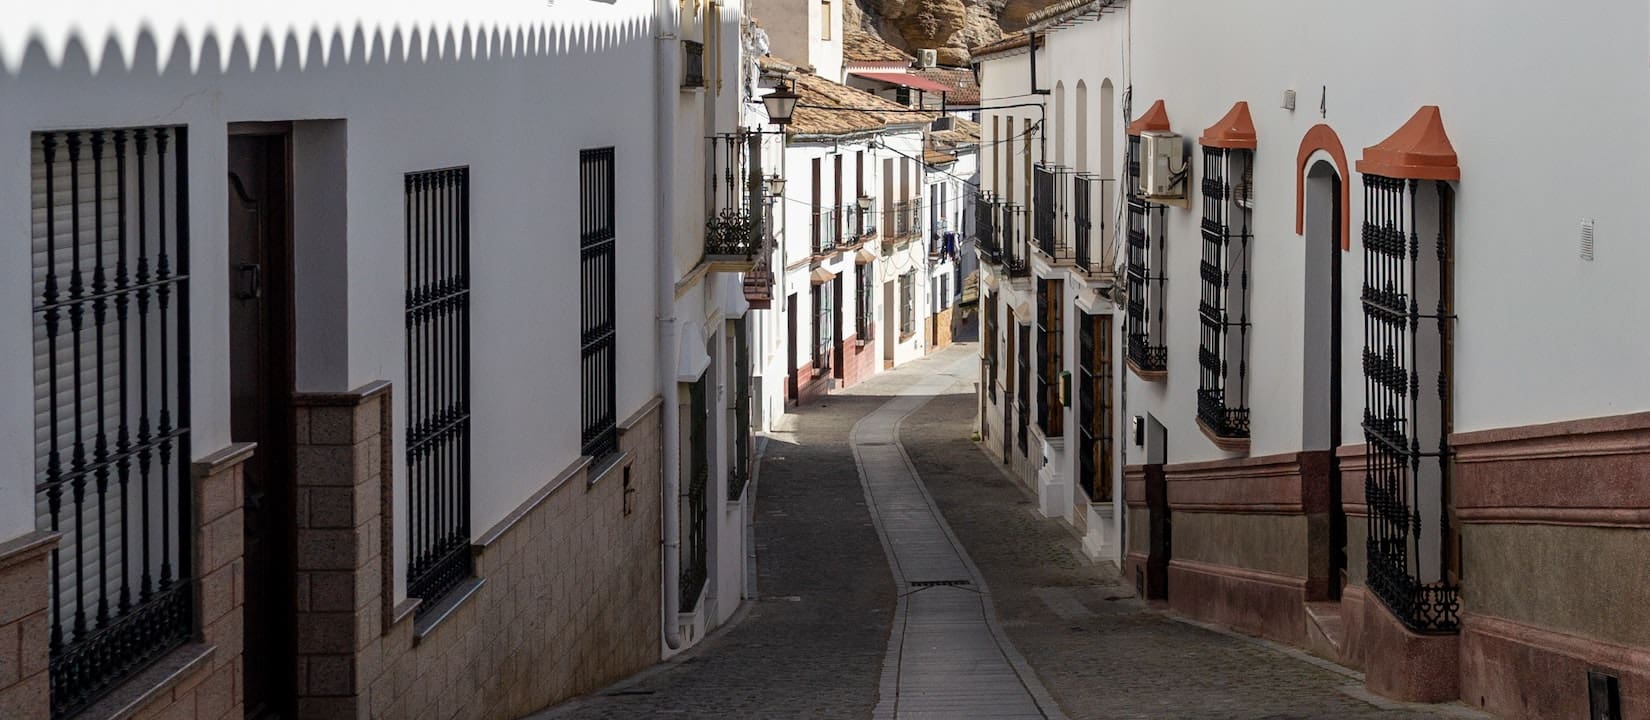 Clases de Español para extranjeros en Jerez